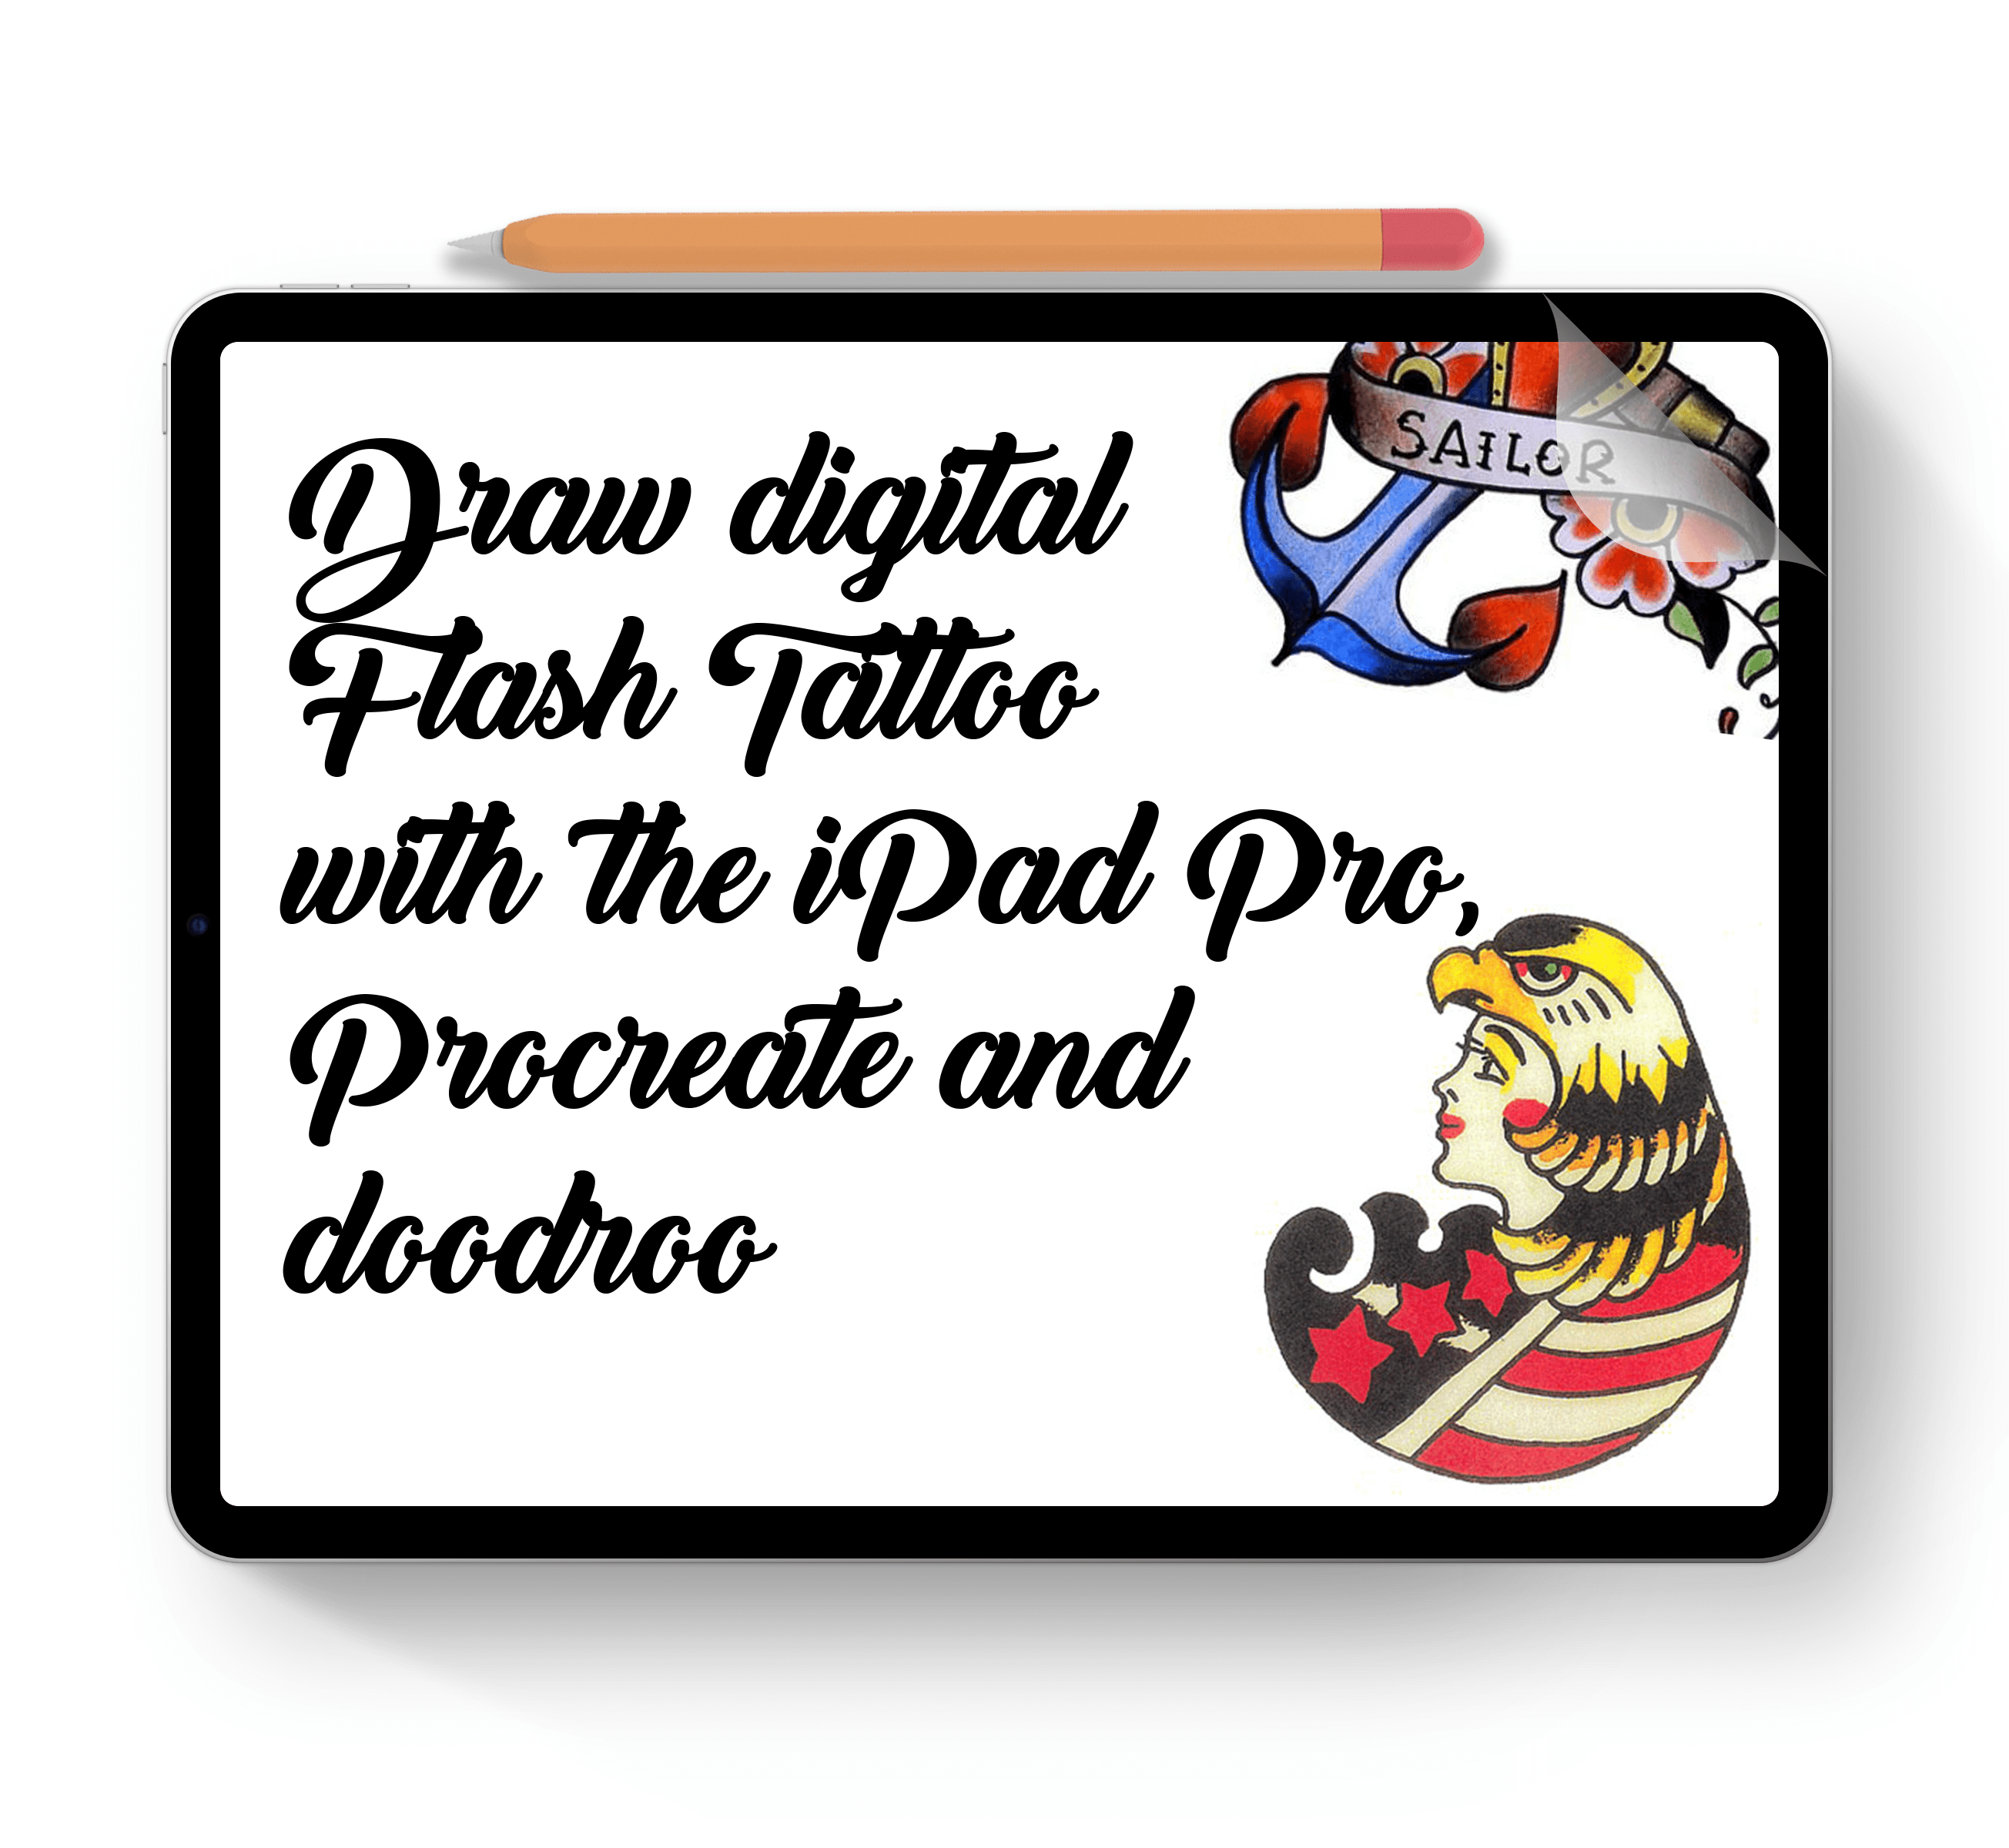 Draw digital Flash Tattoo with the iPad Pro, Procreate and doodroo